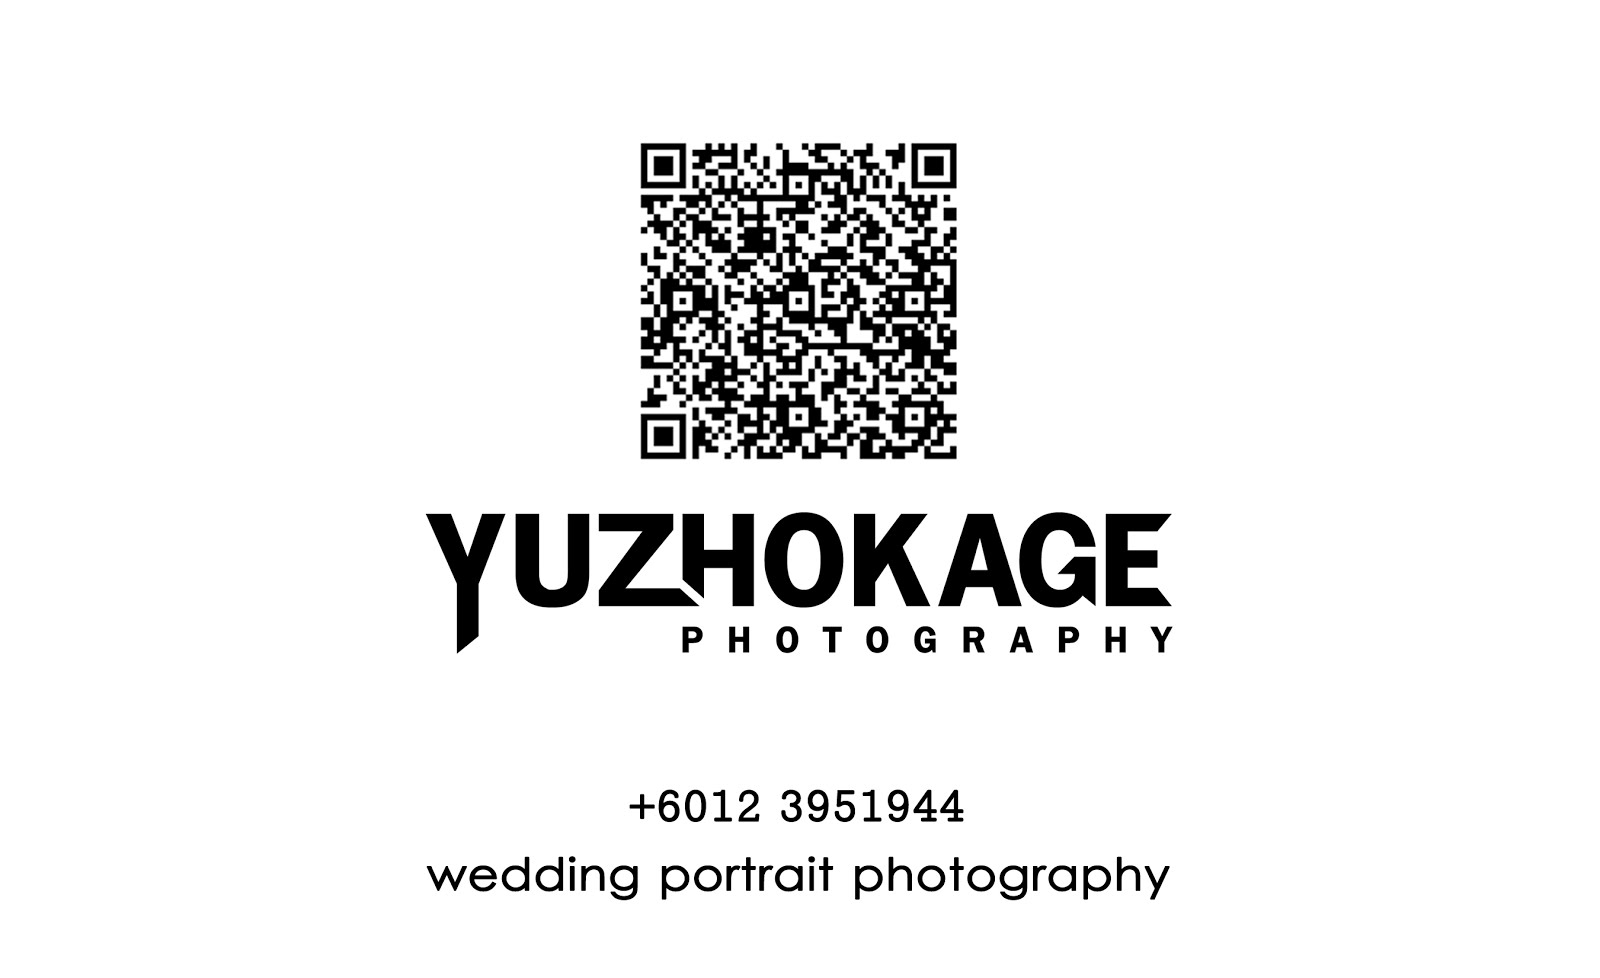 yuzhokage photography